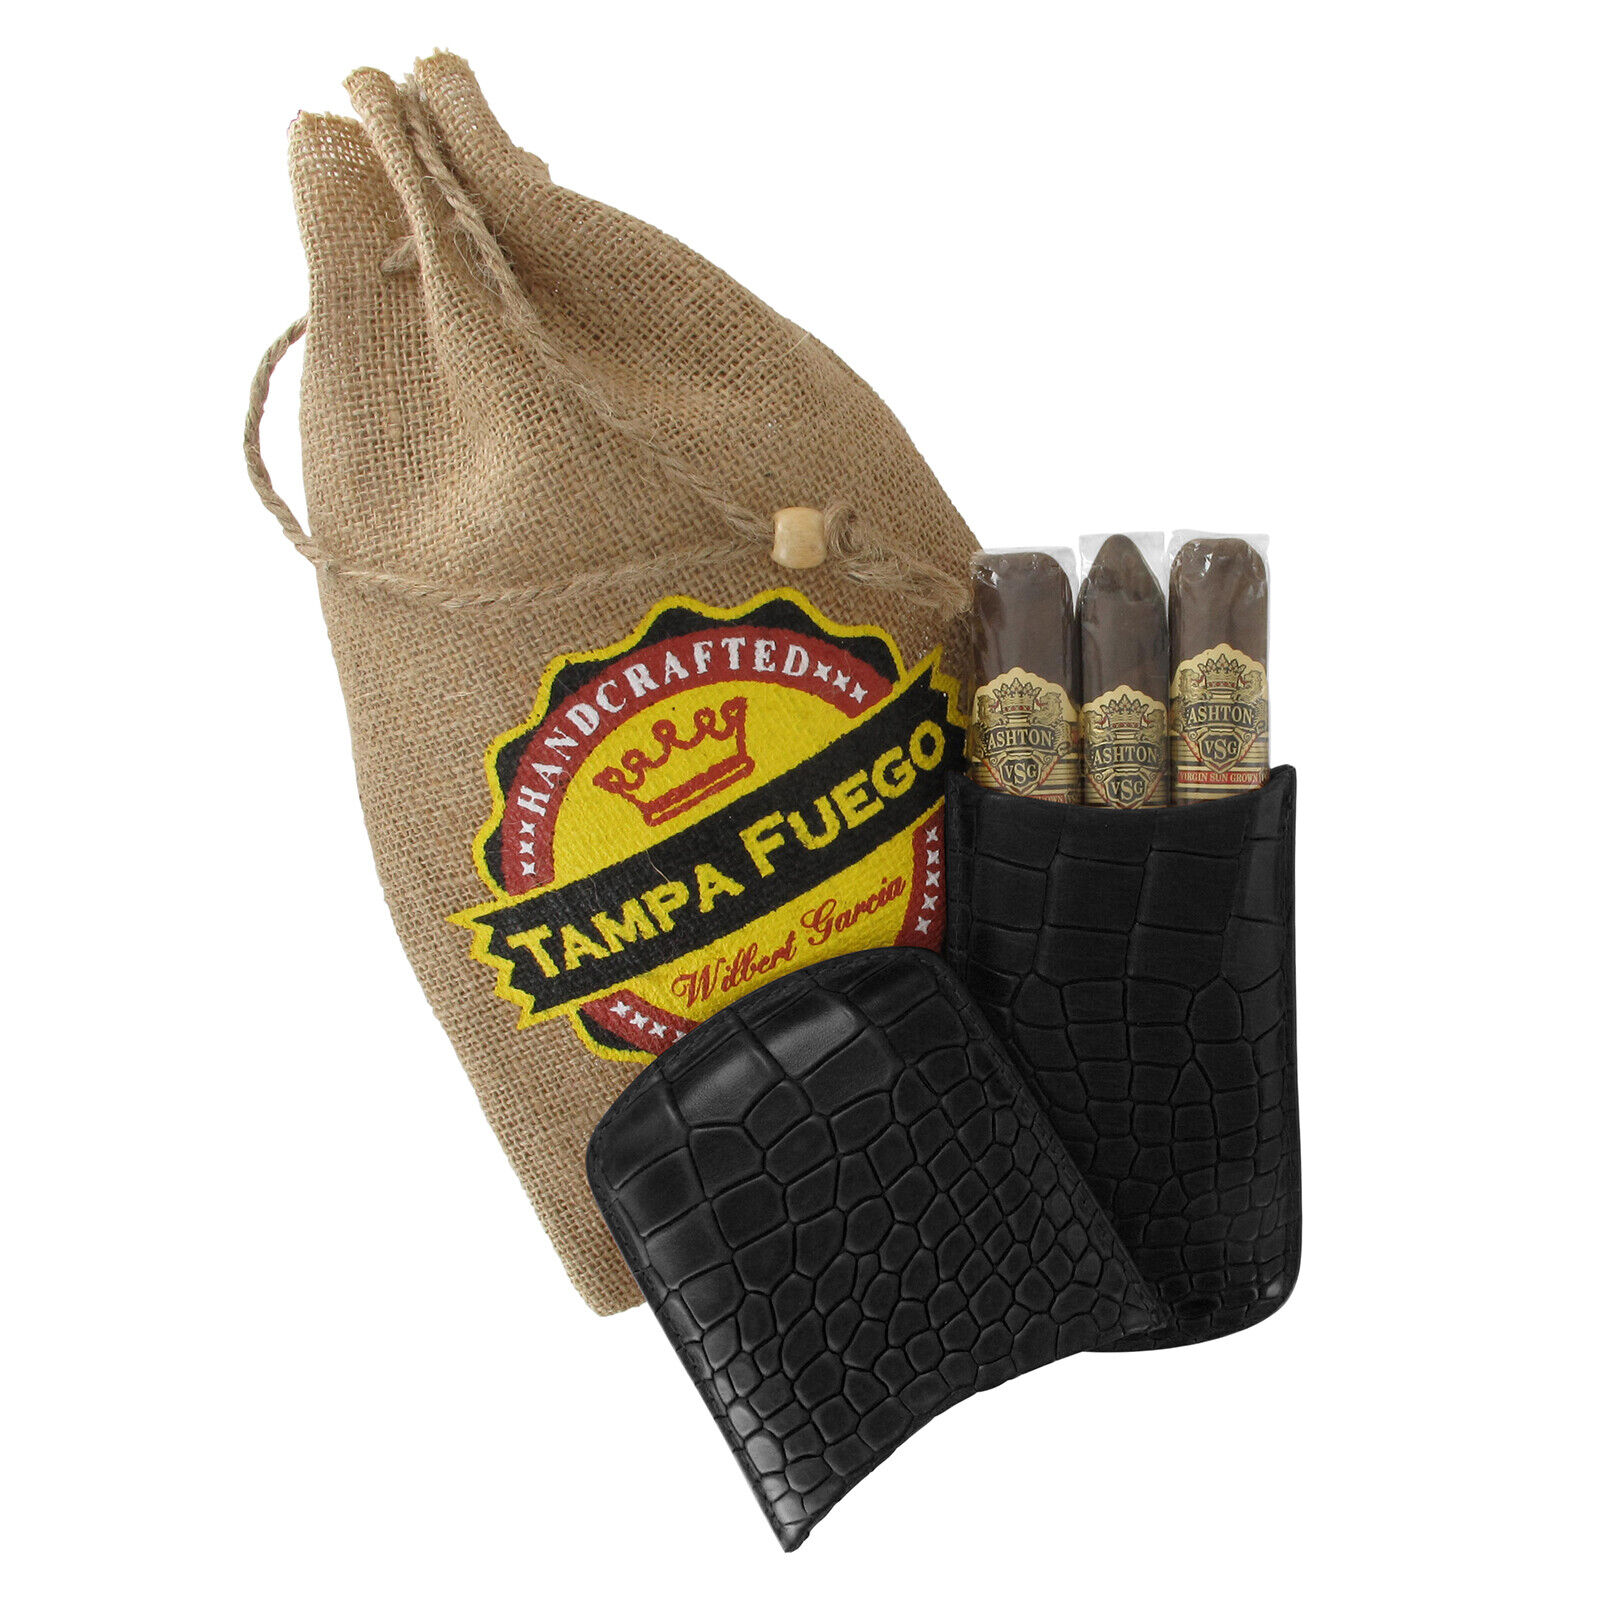 Tampa Fuego Cigar Case Croco Grain Genuine Leather Black Robusto Made in USA